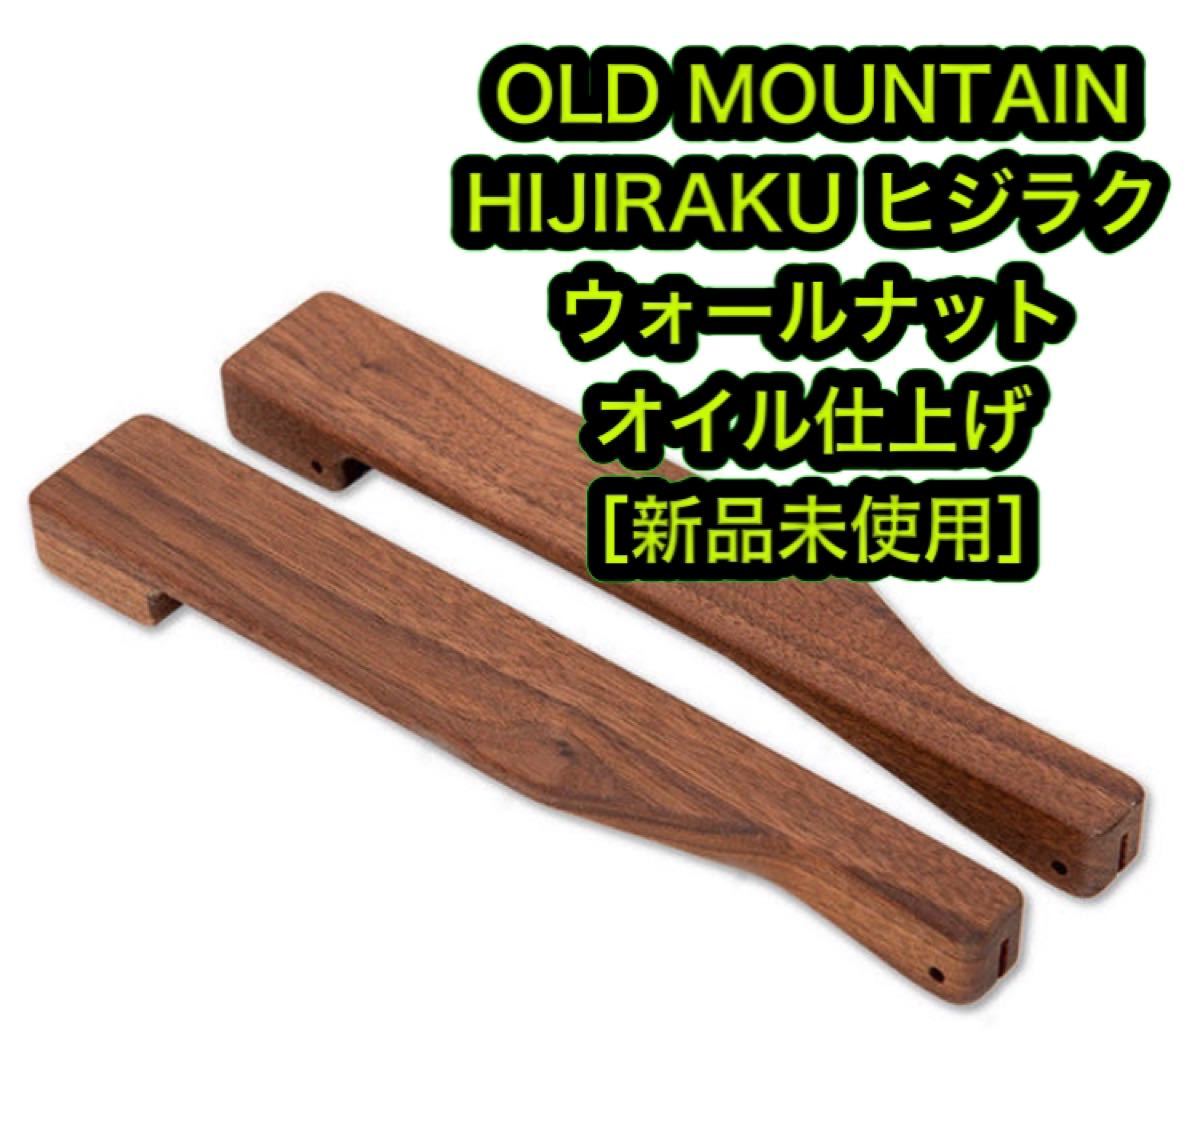 OLD MOUNTAIN HIJIRAKU ウォールナット-